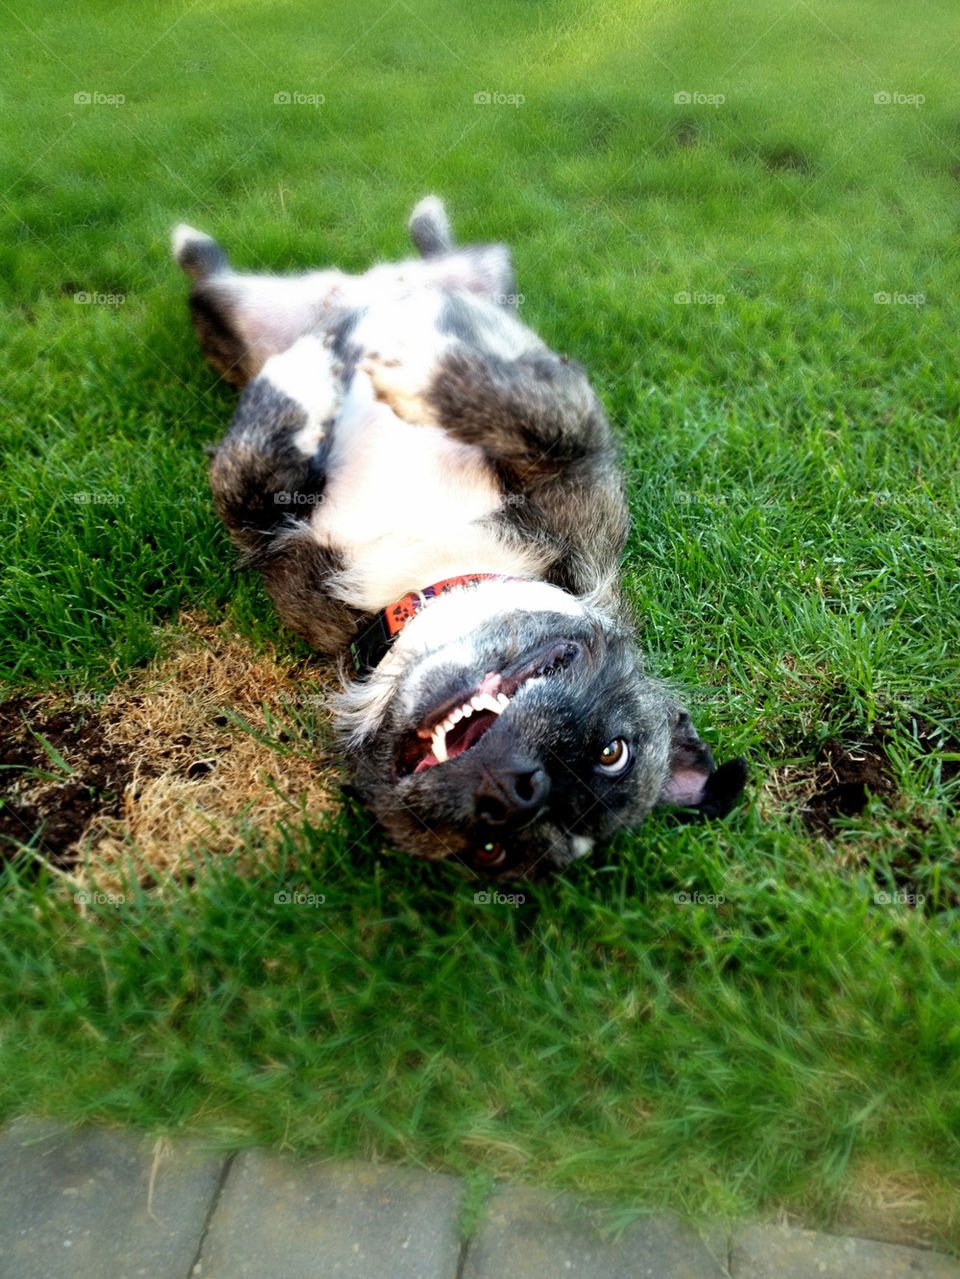 grass dog pet playful by thomasplant